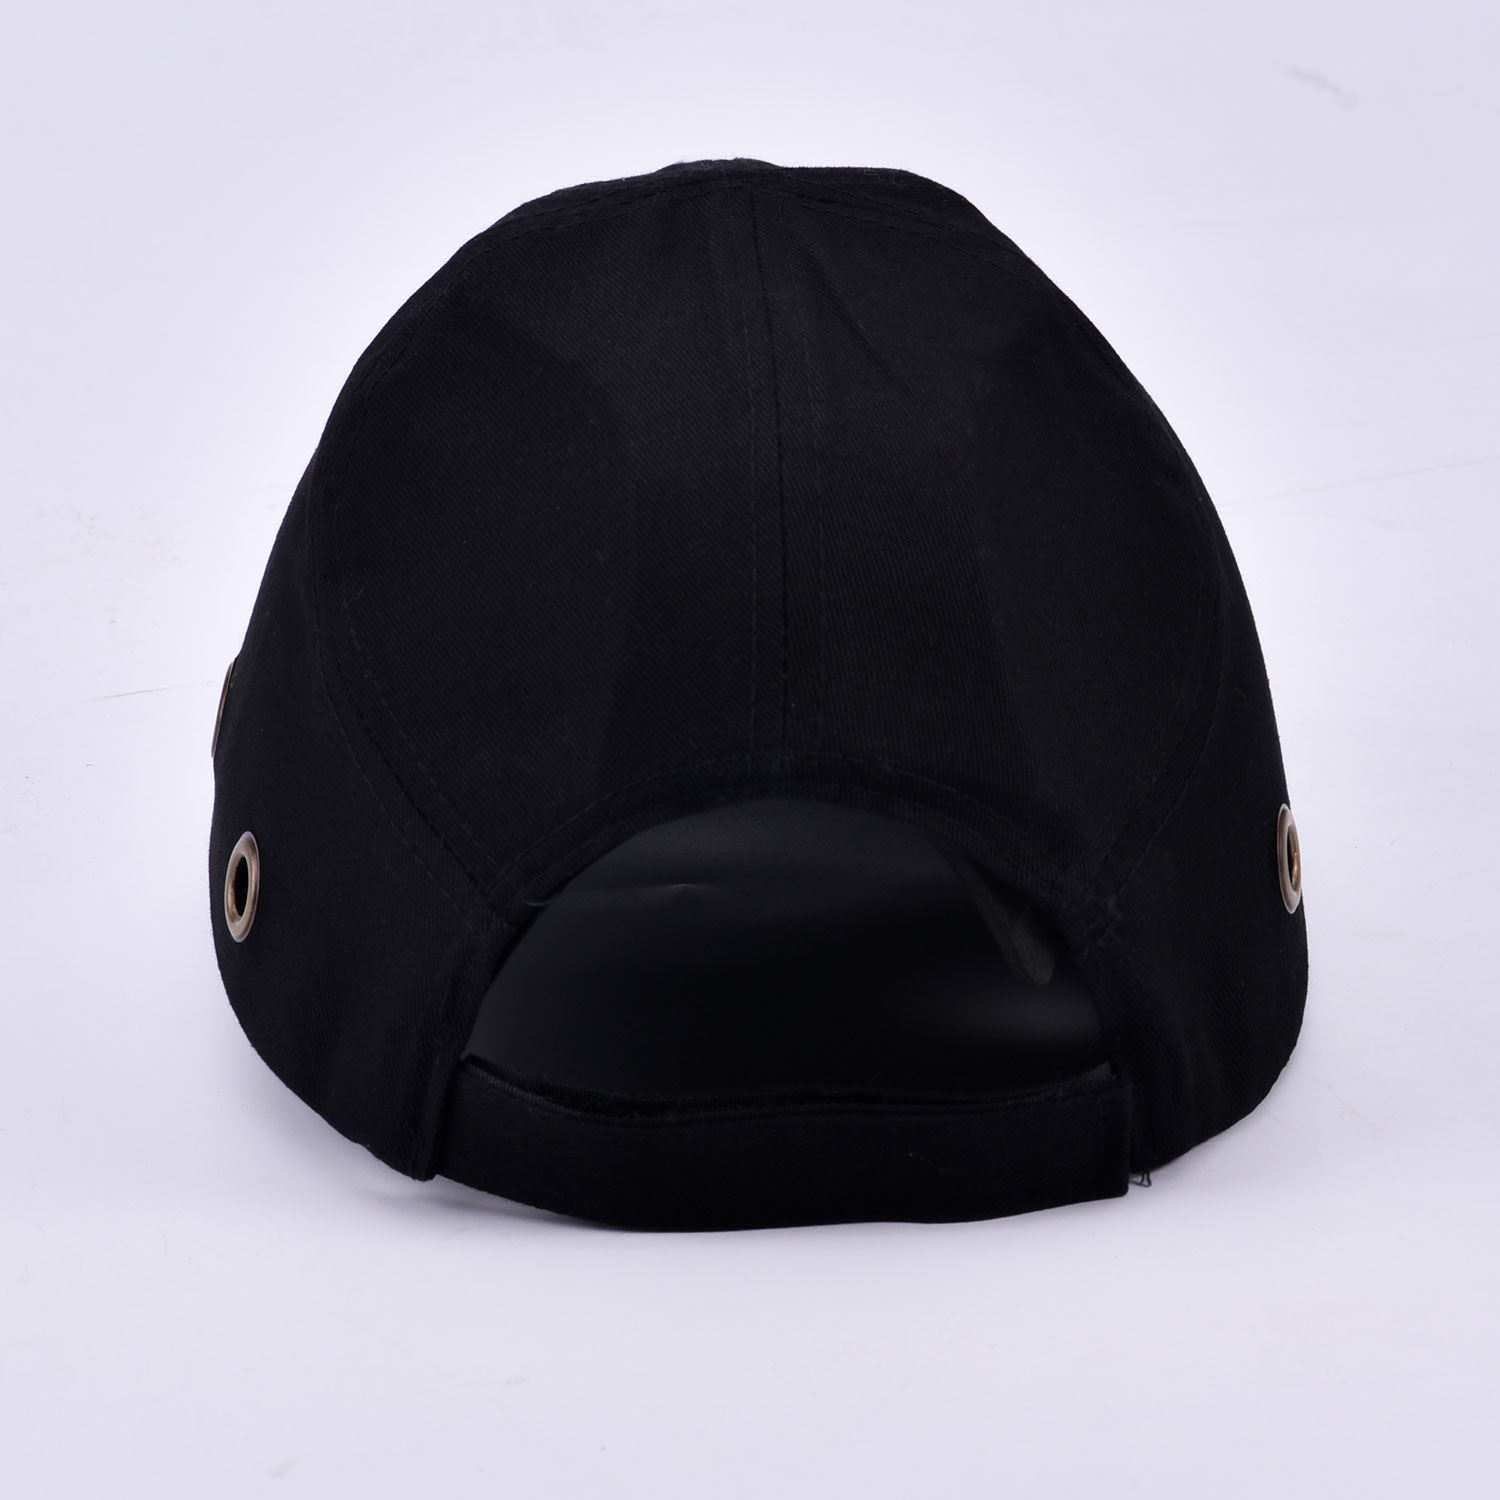 Basball Design Safety Cap Wh001 Black